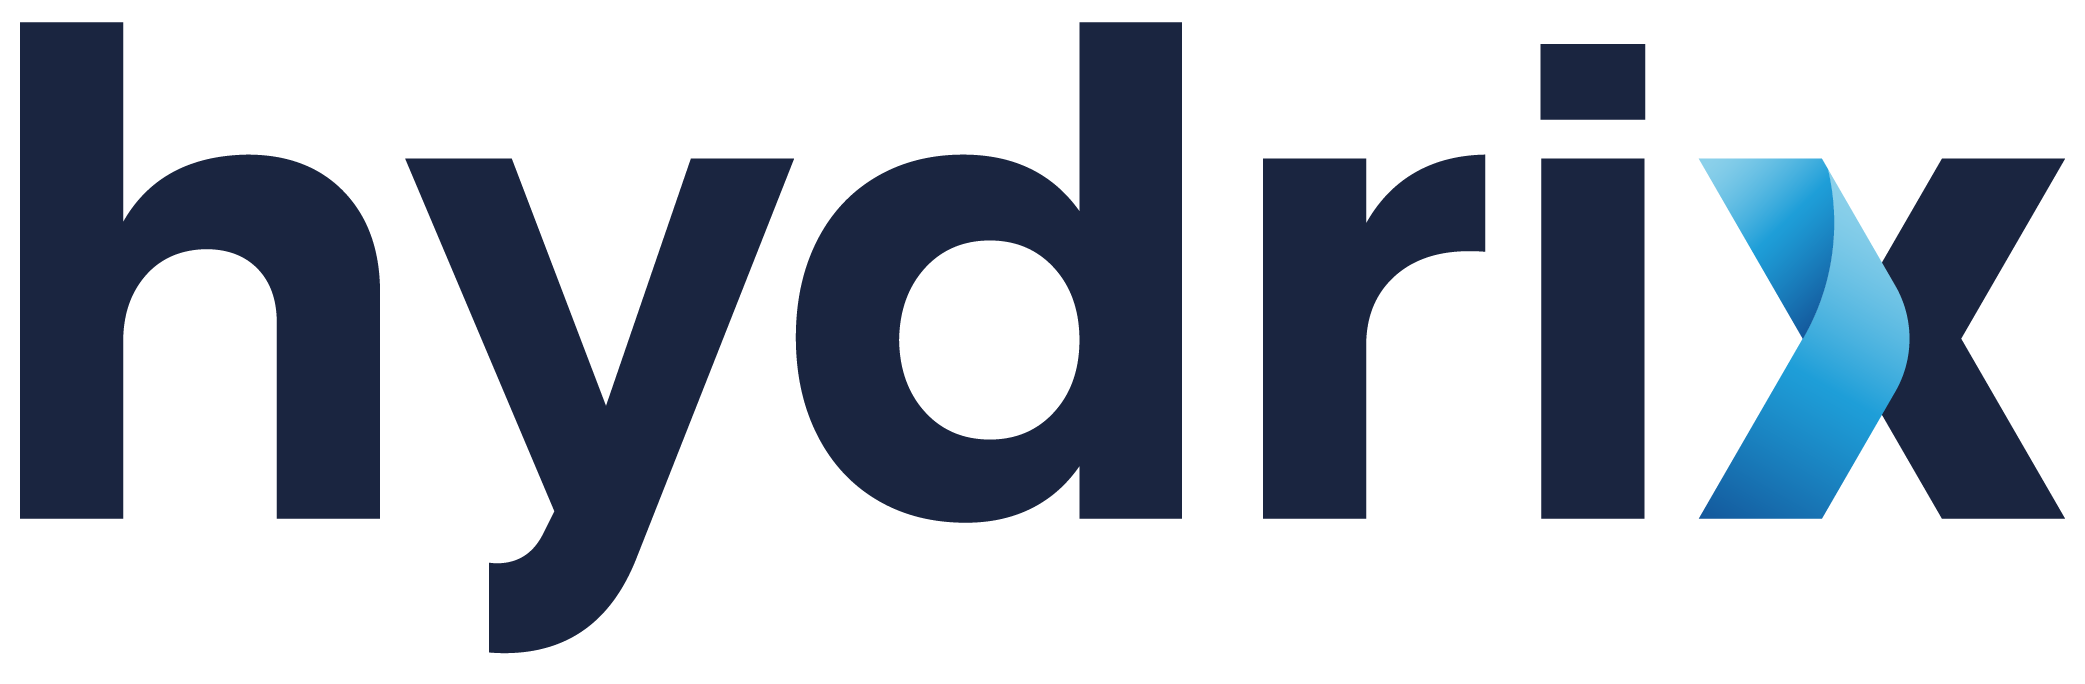 Hydrix Logo No Space 07